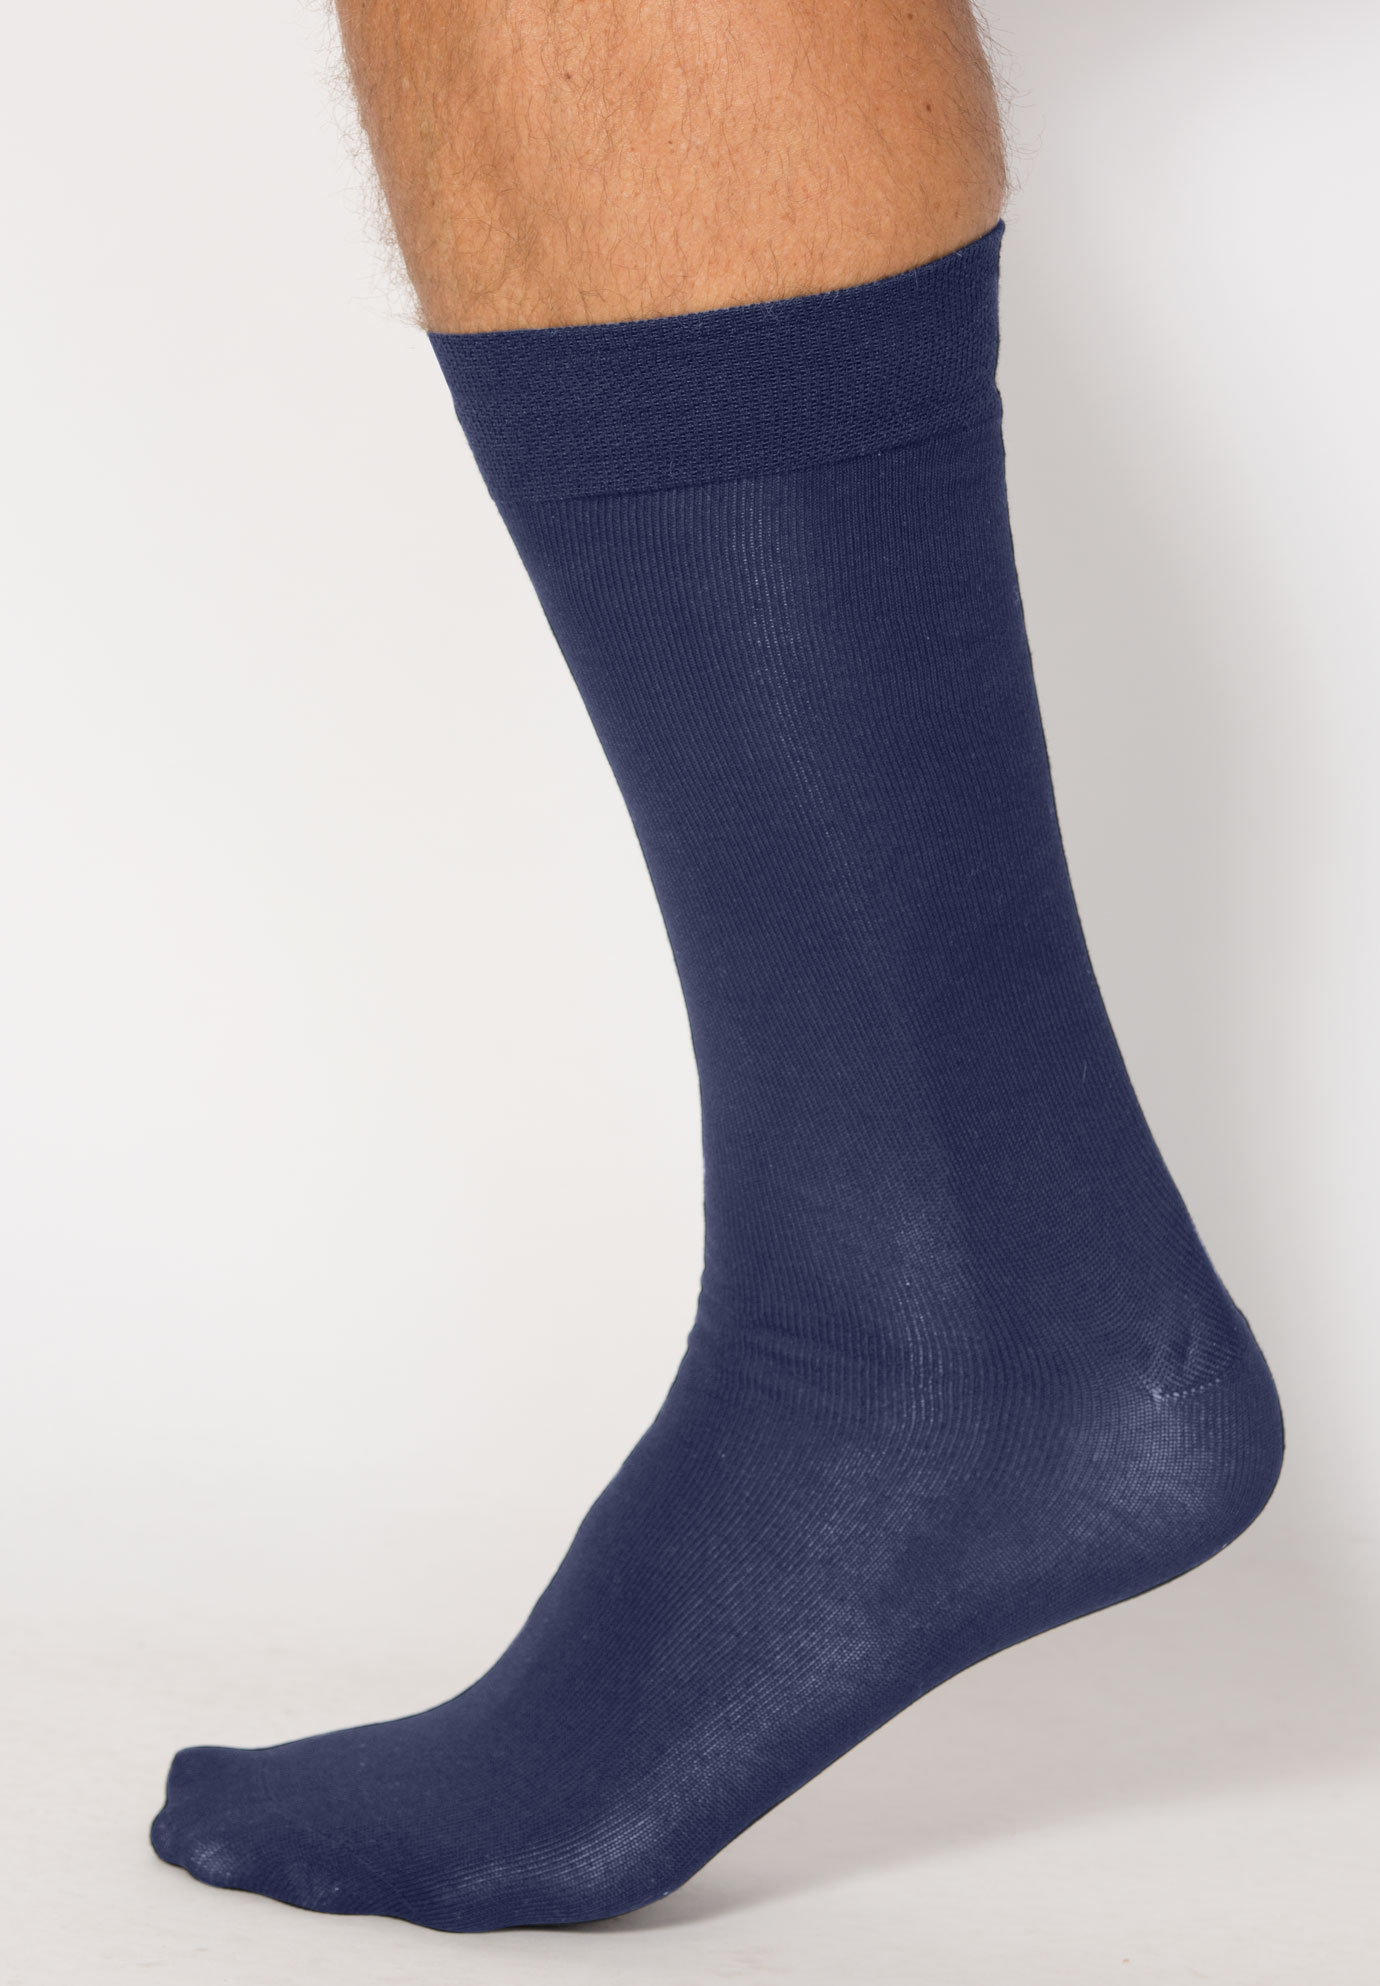 Lightweight Diabetic Dress Socks | Catherine's